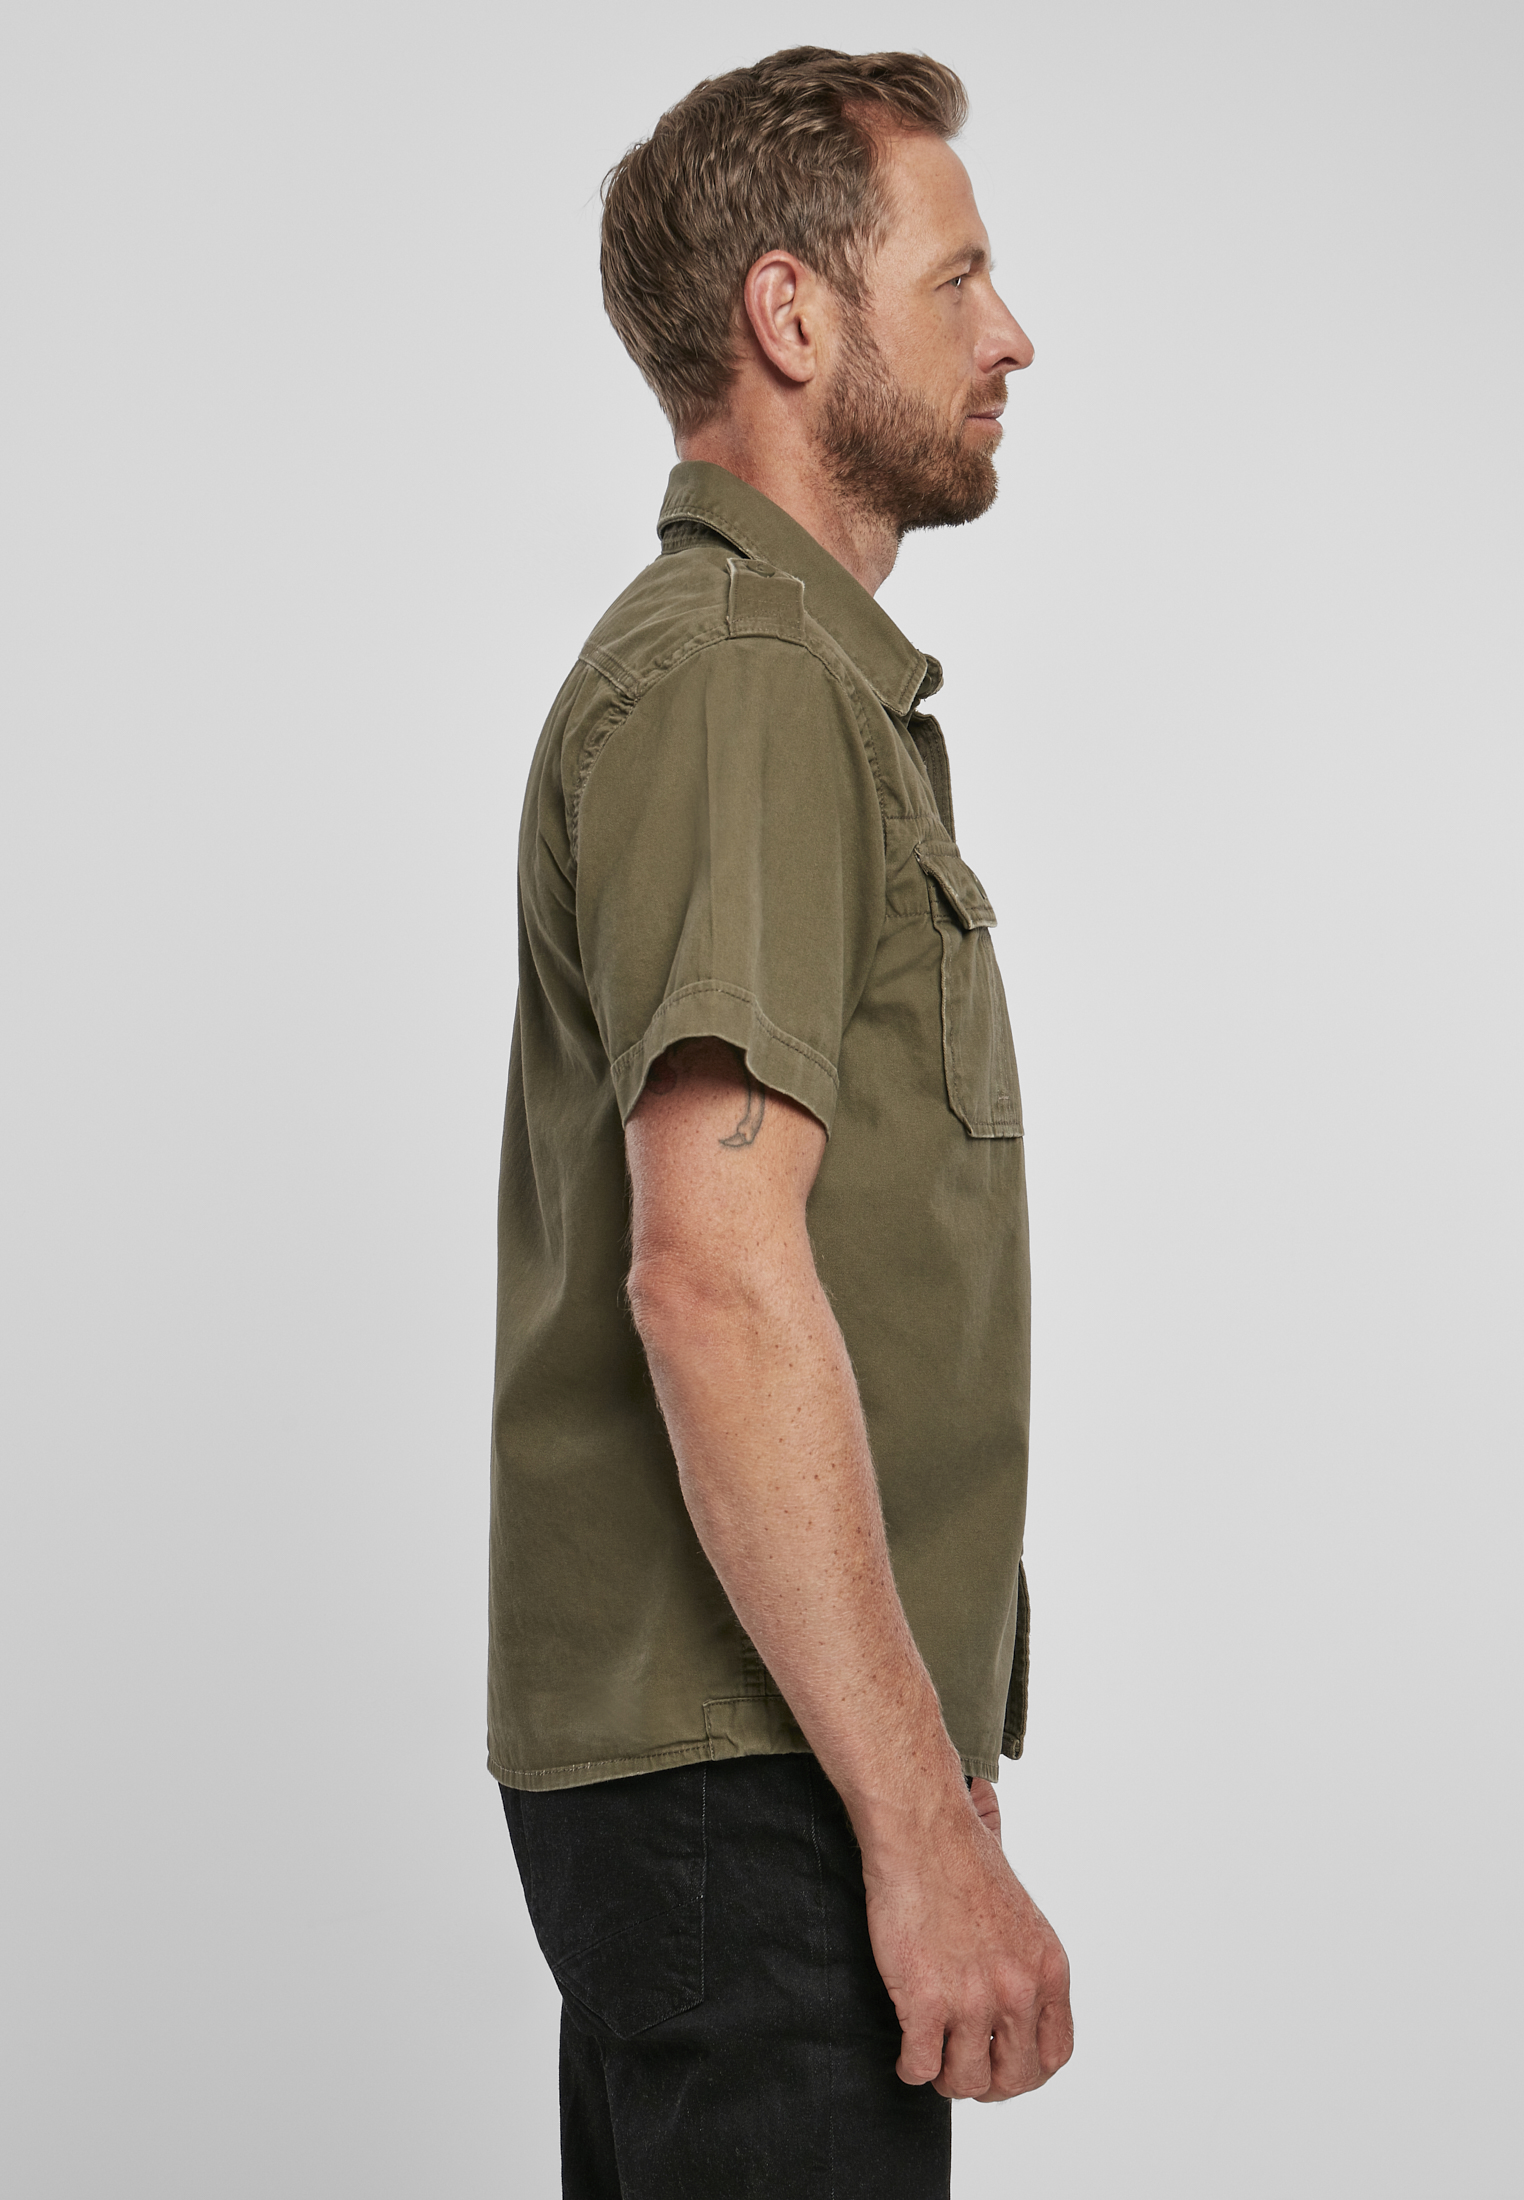 Hemden Vintage Shirt shortsleeve in Farbe olive